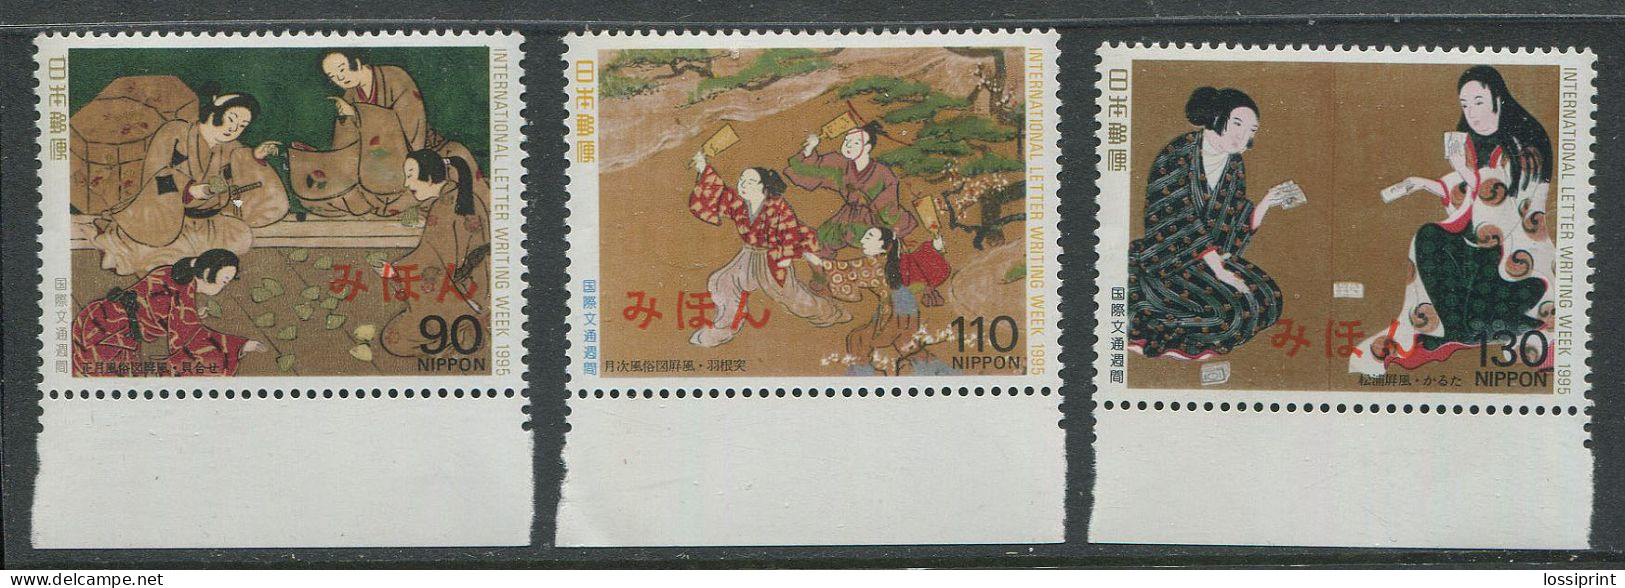 Japan:Unused Stamps Serie International Letter Writing Week, 1995, MNH - Unused Stamps